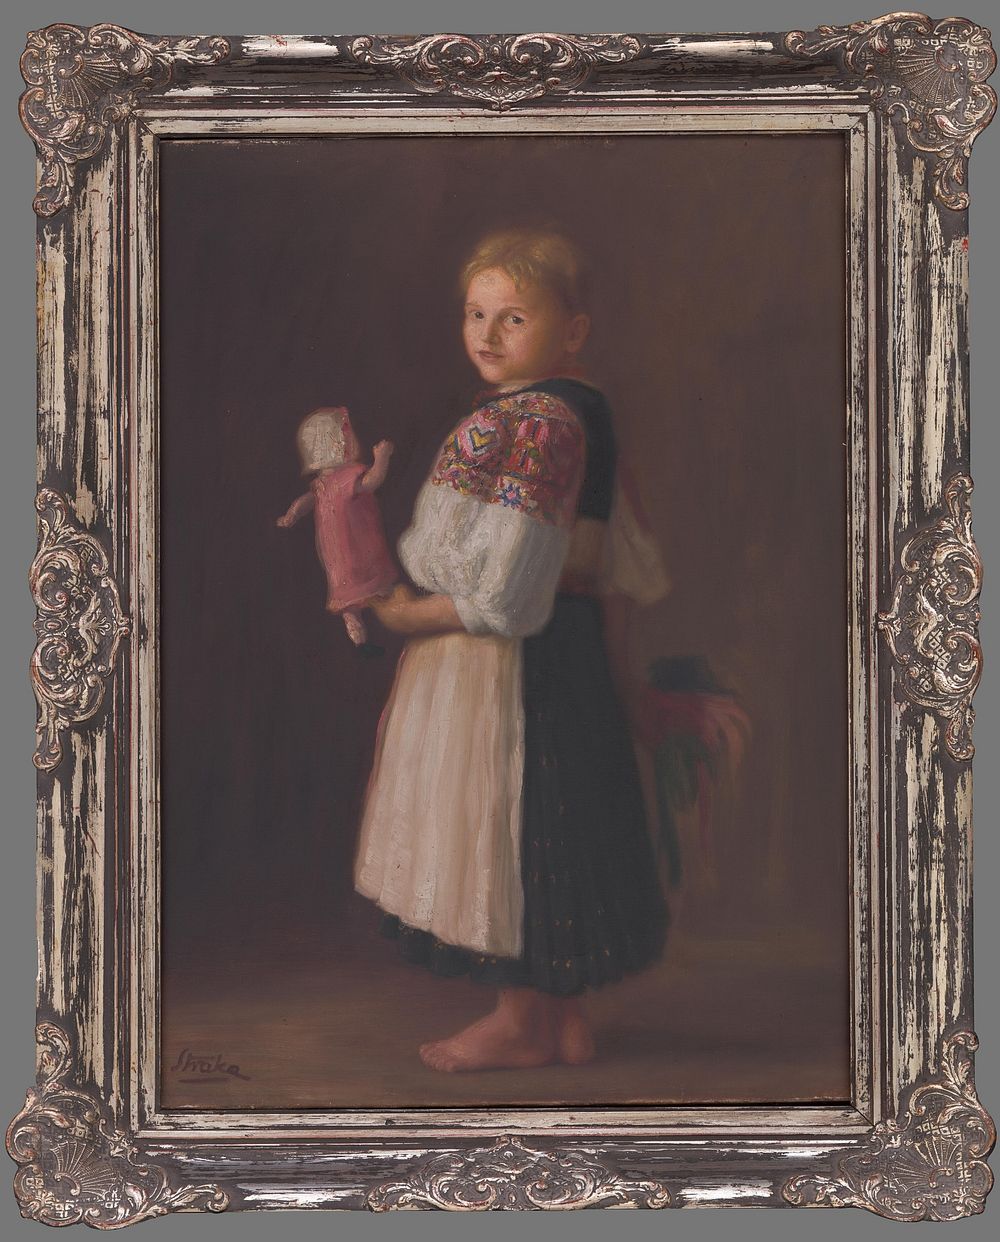 A girl with a doll, Stefan Straka by Štefan Straka